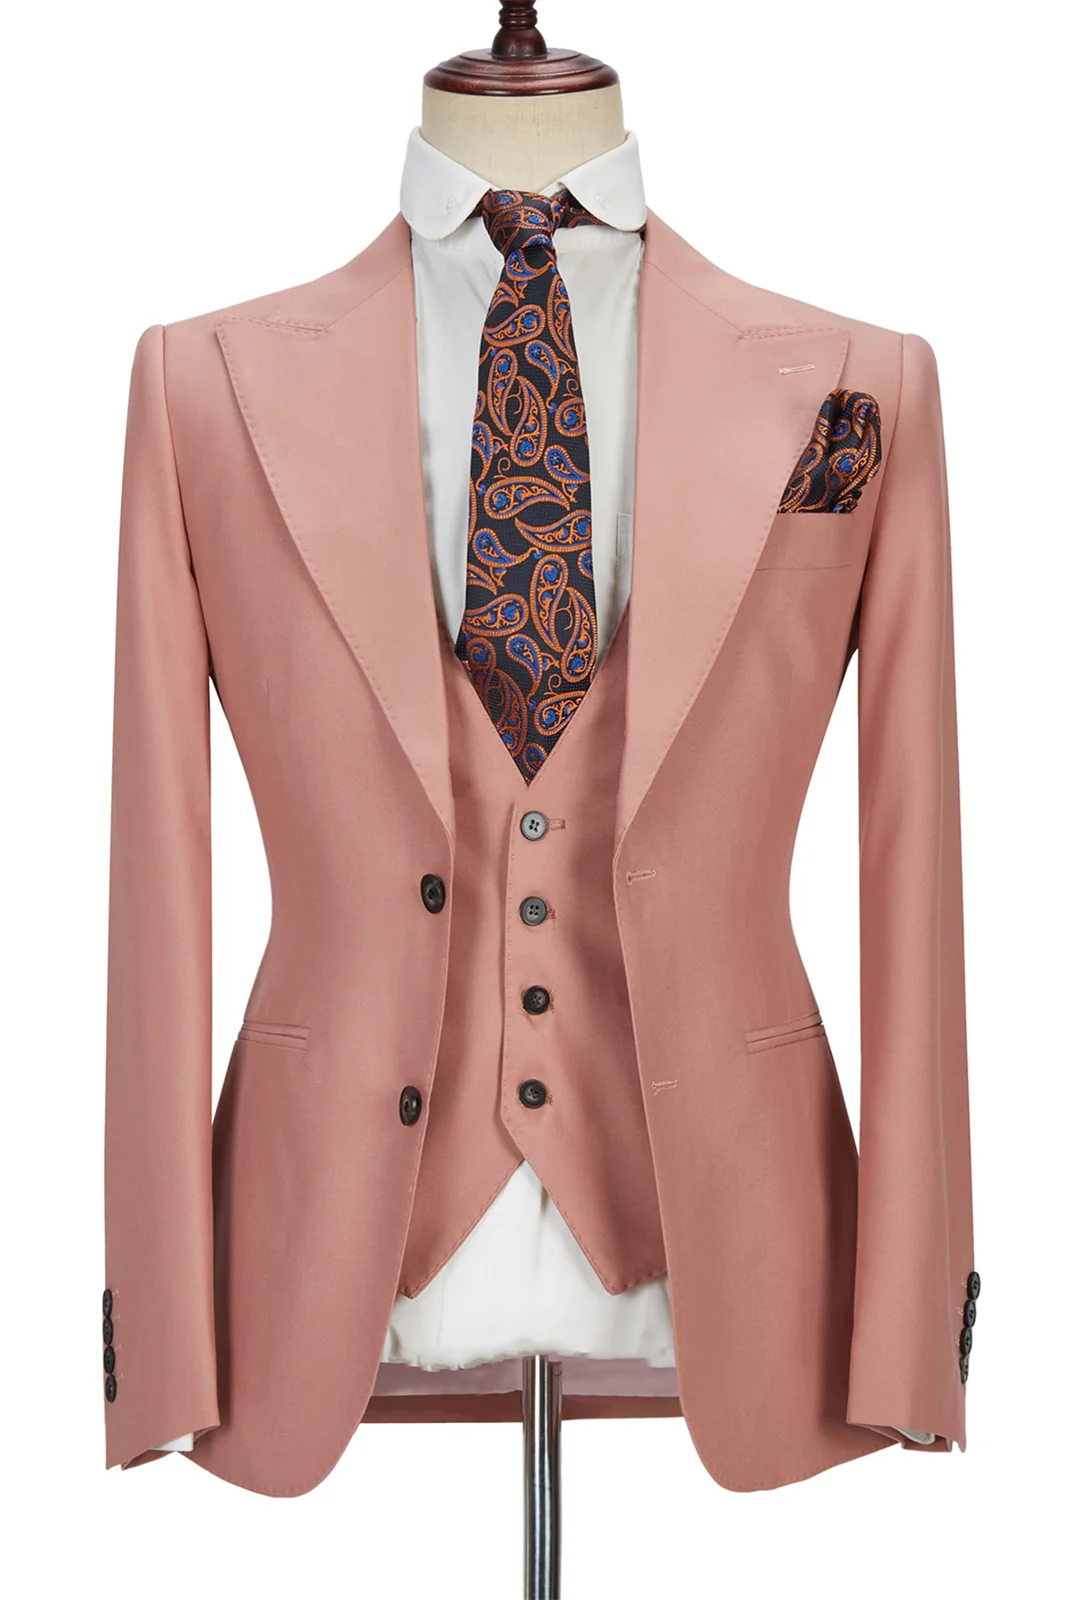 Ivan Three Pieces Coral Pink Two Buttons Peak Lapel Men's Suit